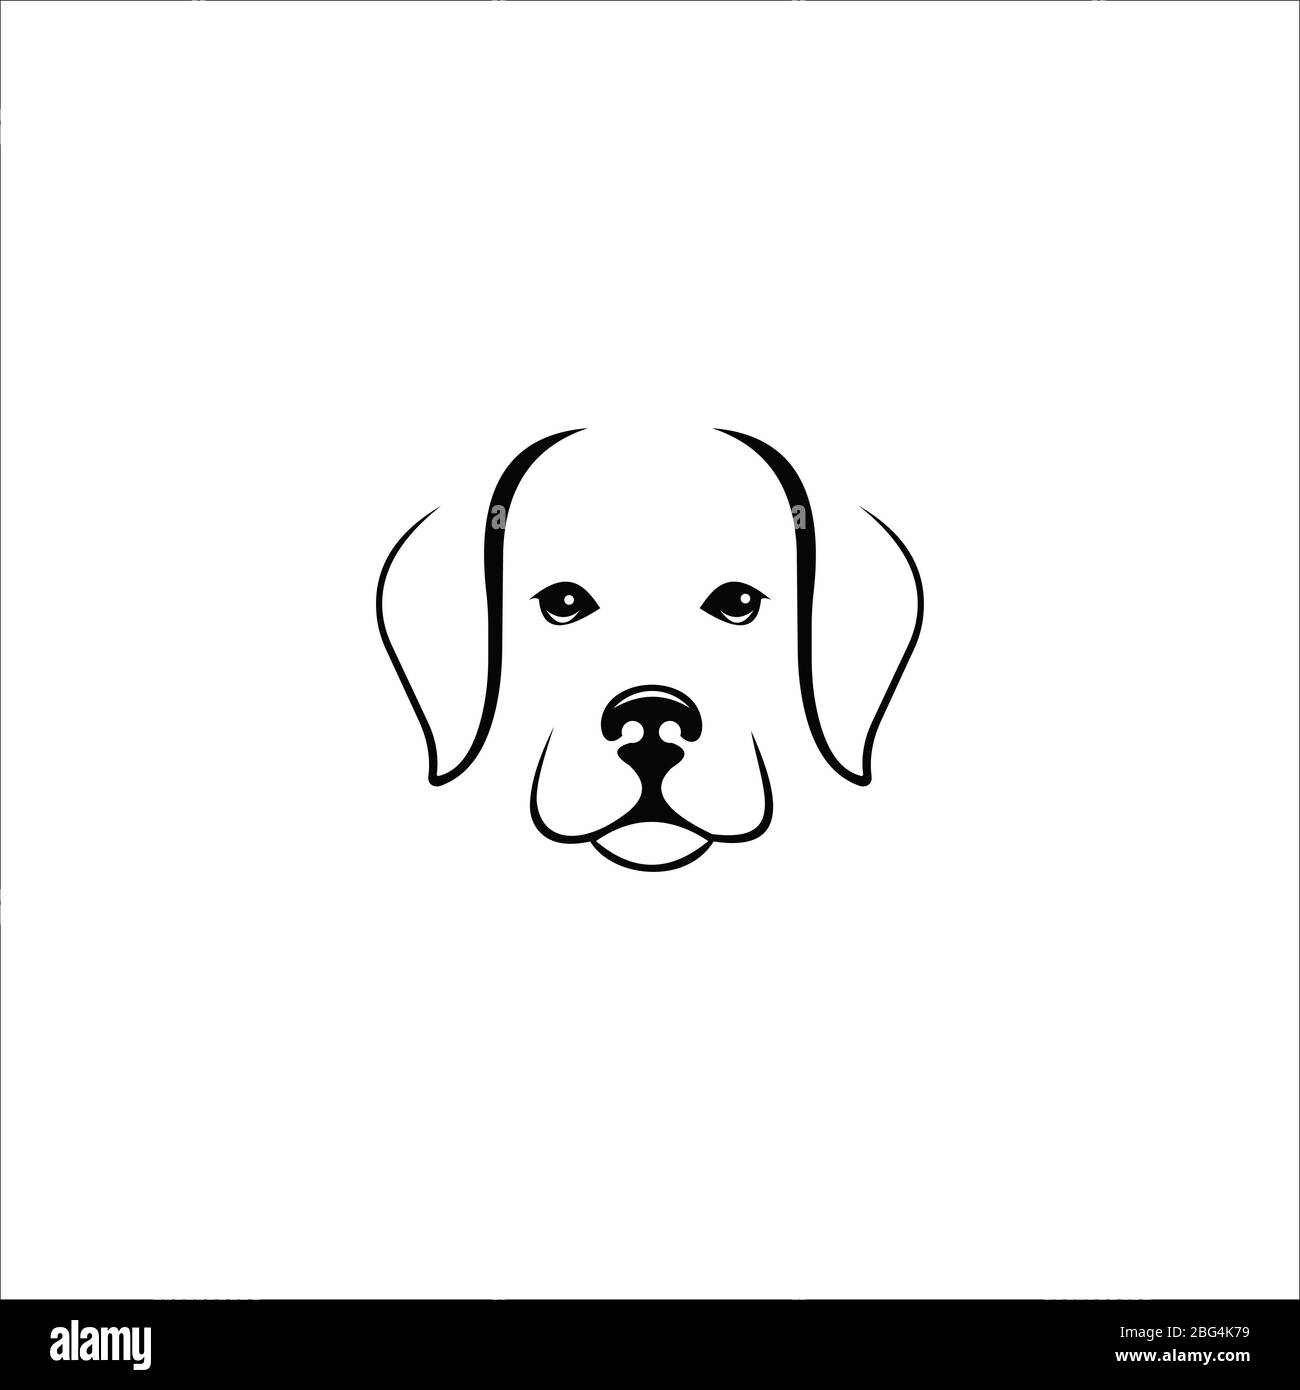 dog design logo